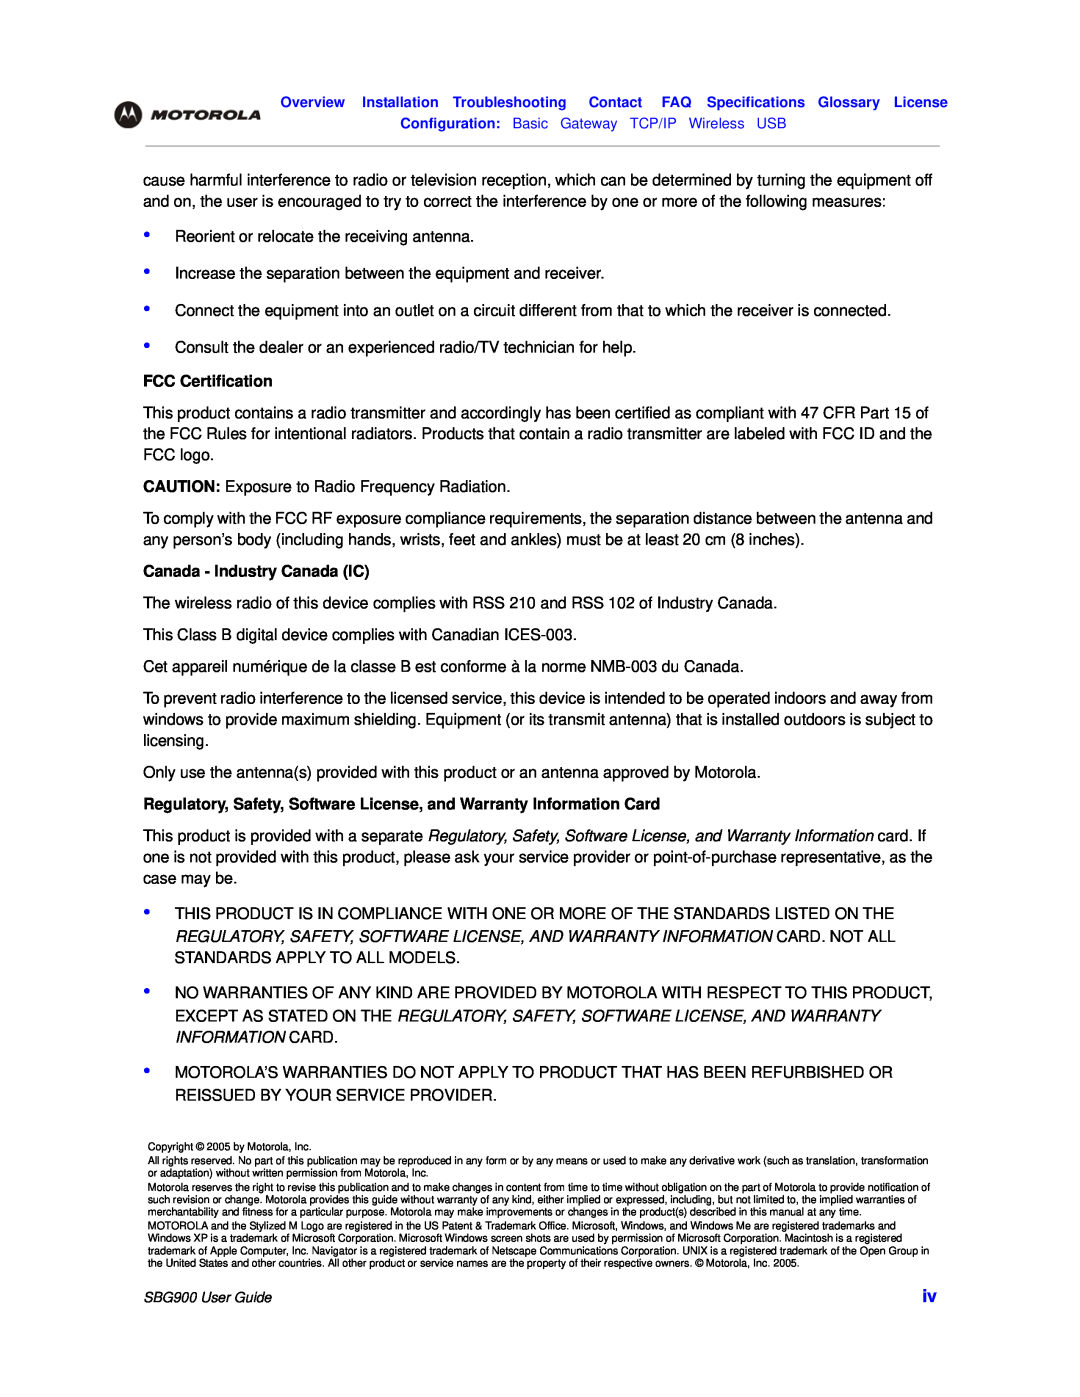 Motorola SBG900 manual FCC Certification, Canada - Industry Canada IC 